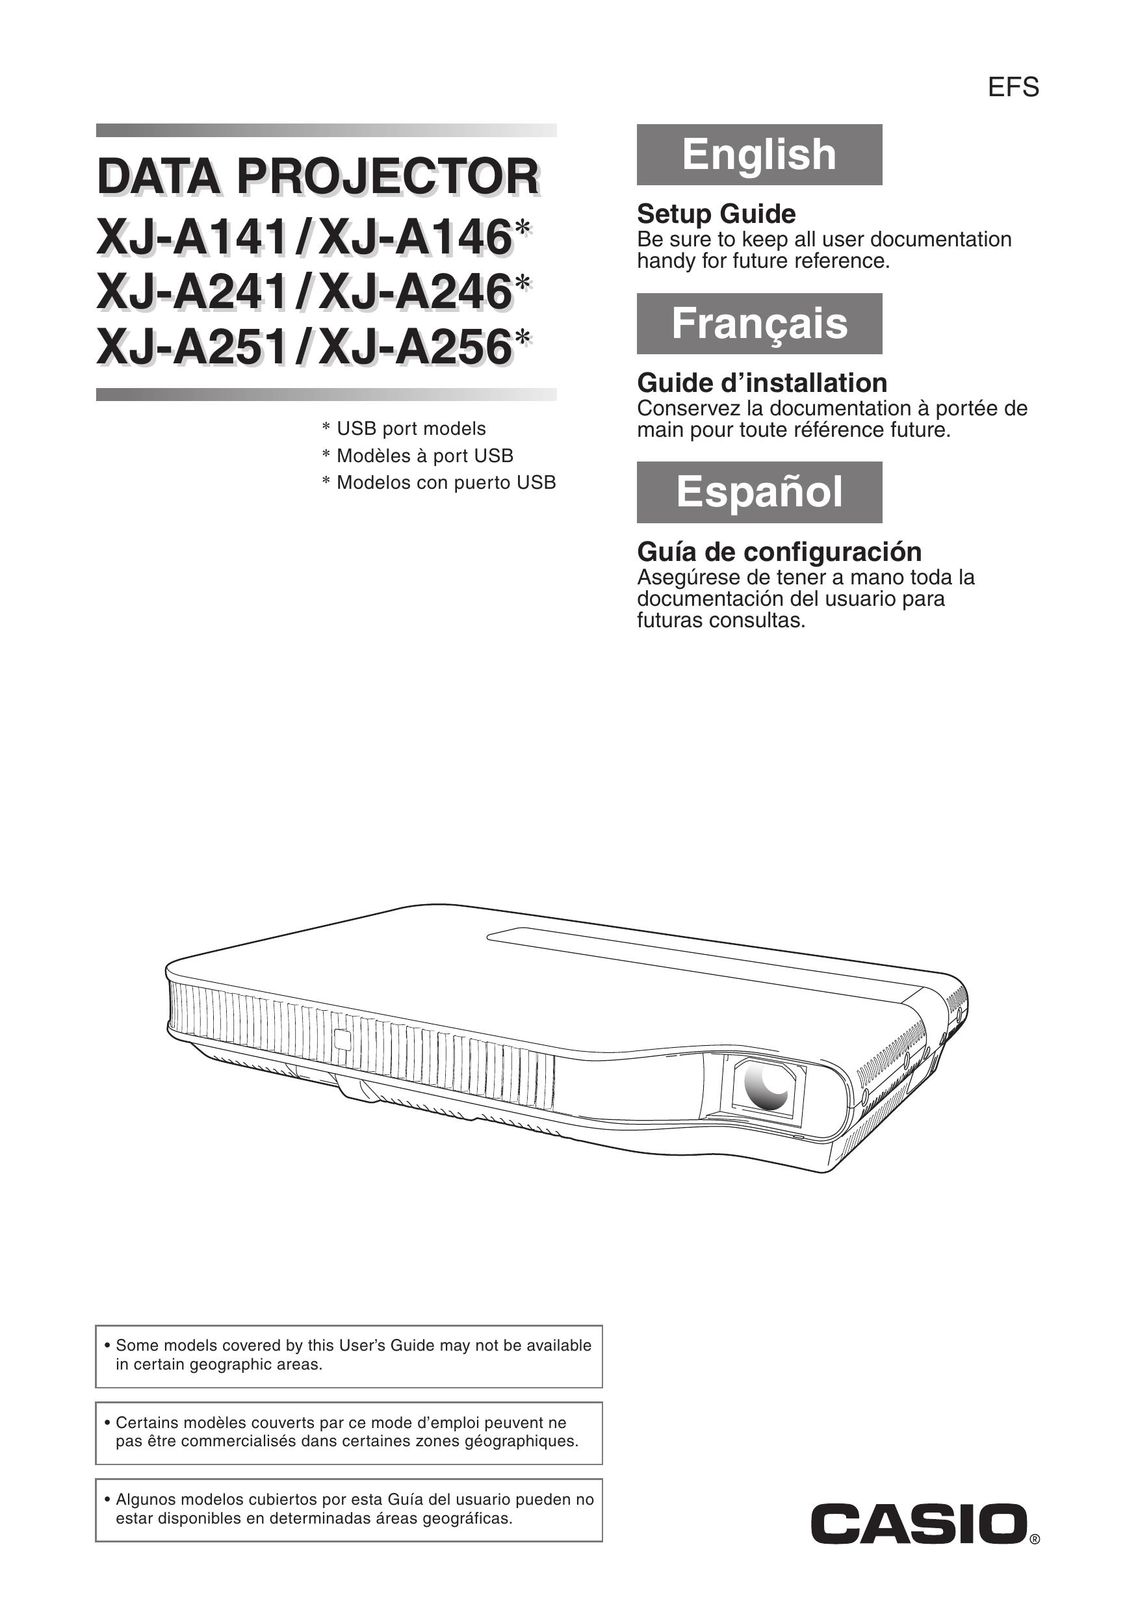 Casio XJ-A141 Projector User Manual